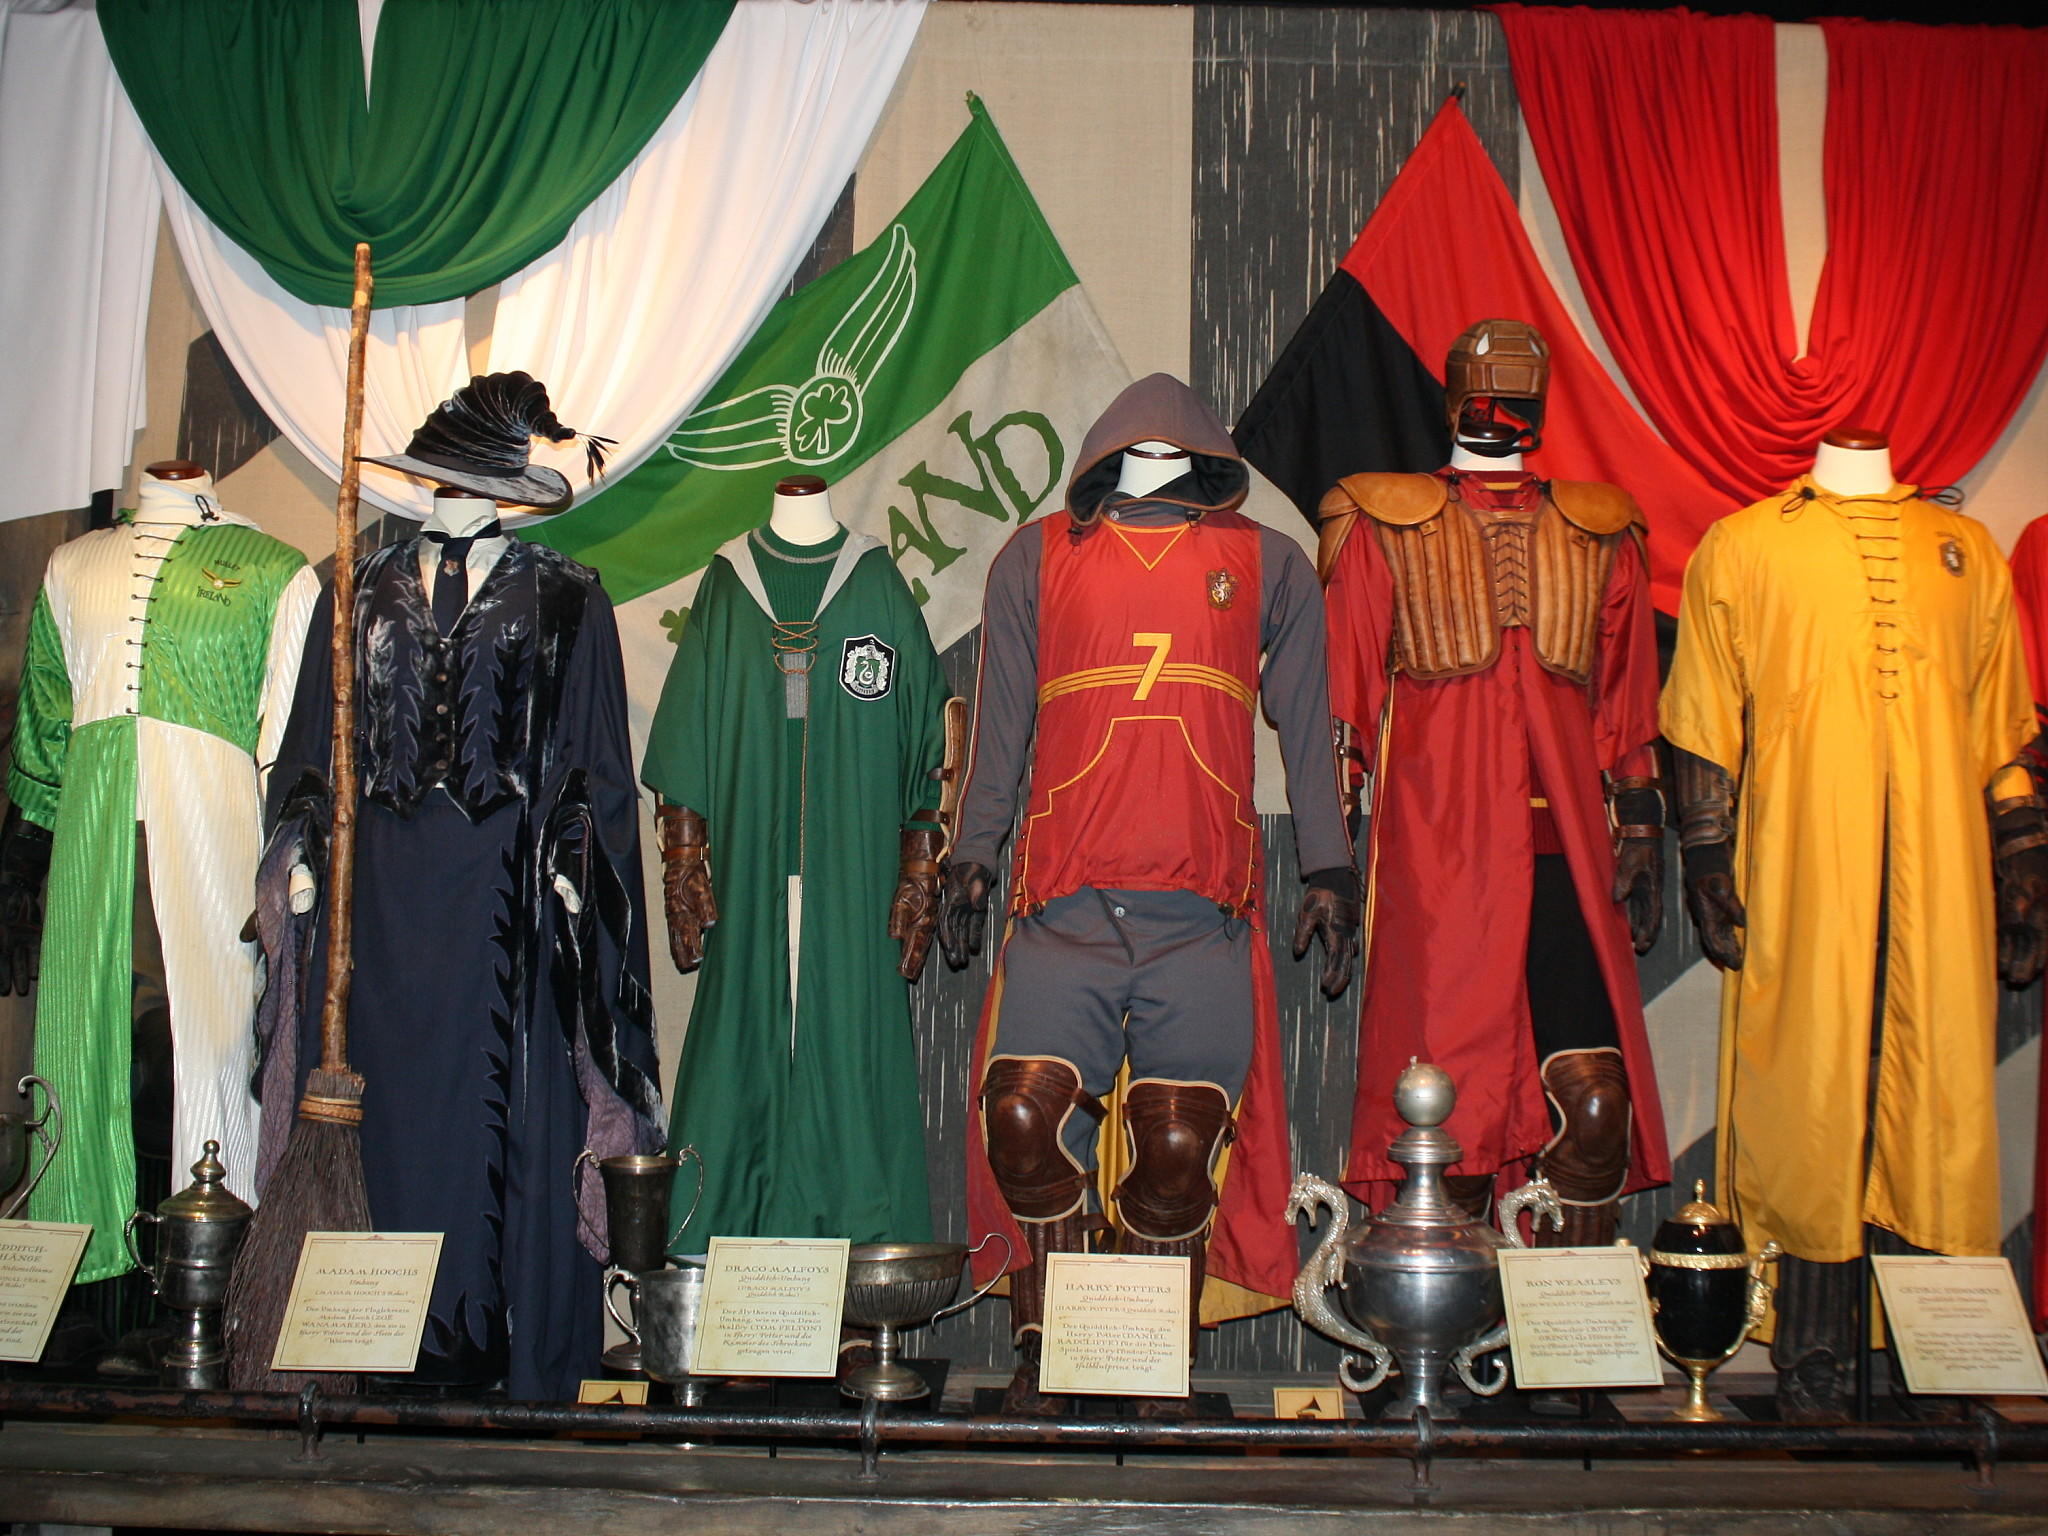 Harry Potter - The Exhibition: Auf den Spuren des Zaubererlehrlings